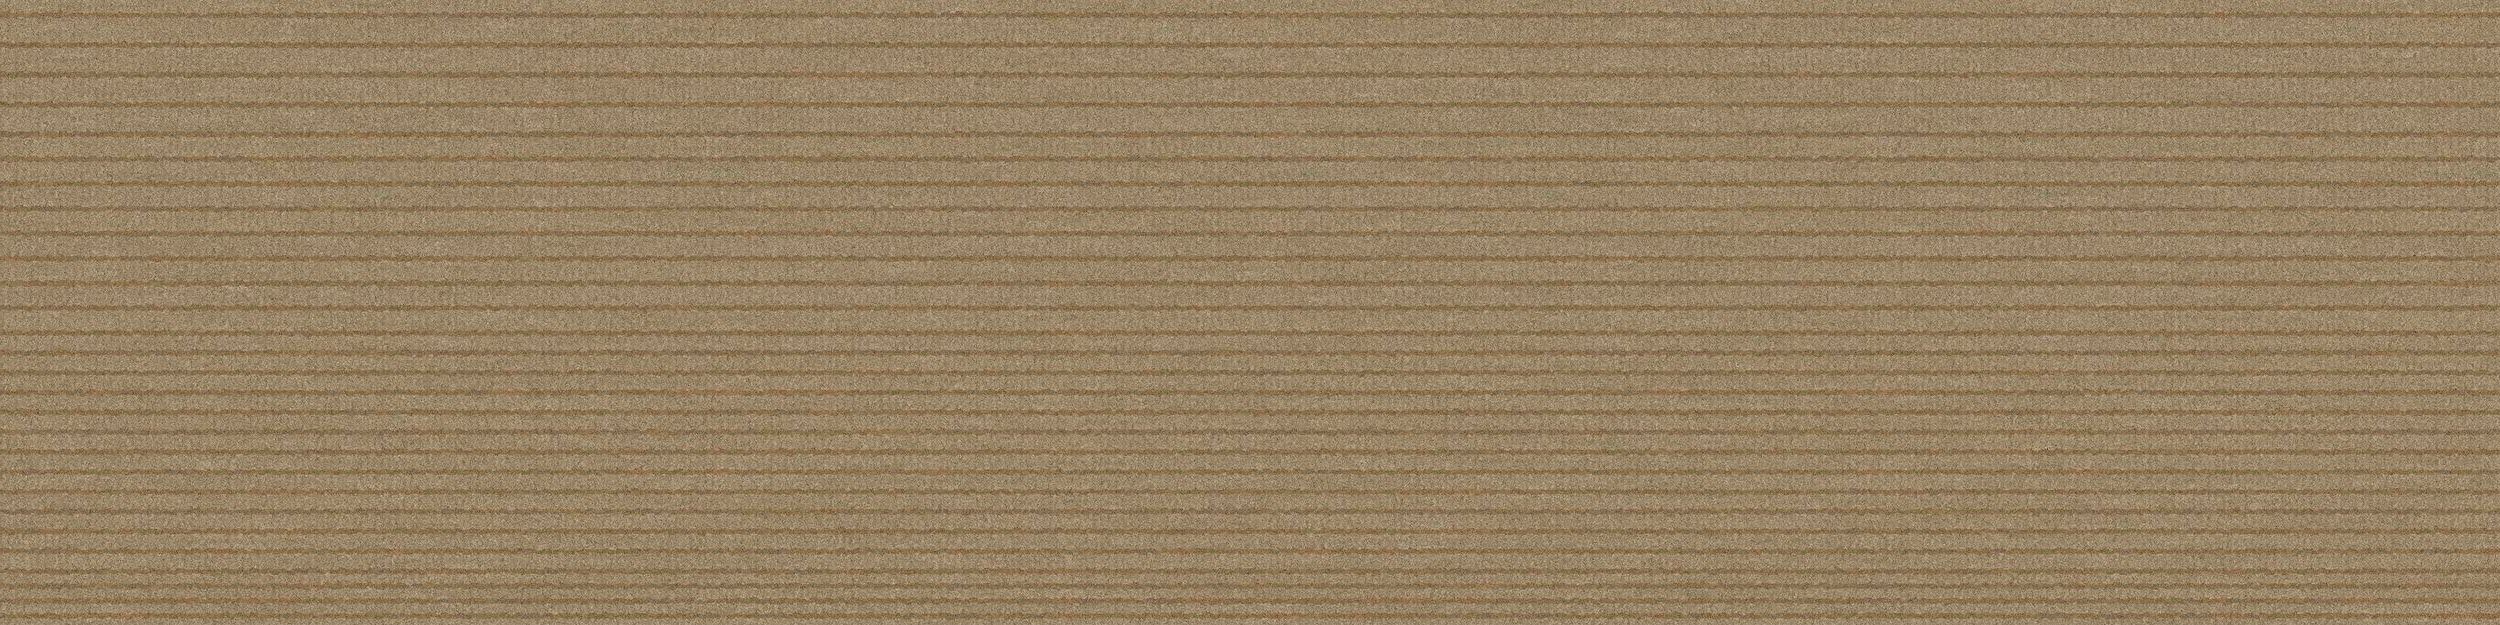 B703 Carpet Tile In Sand imagen número 2